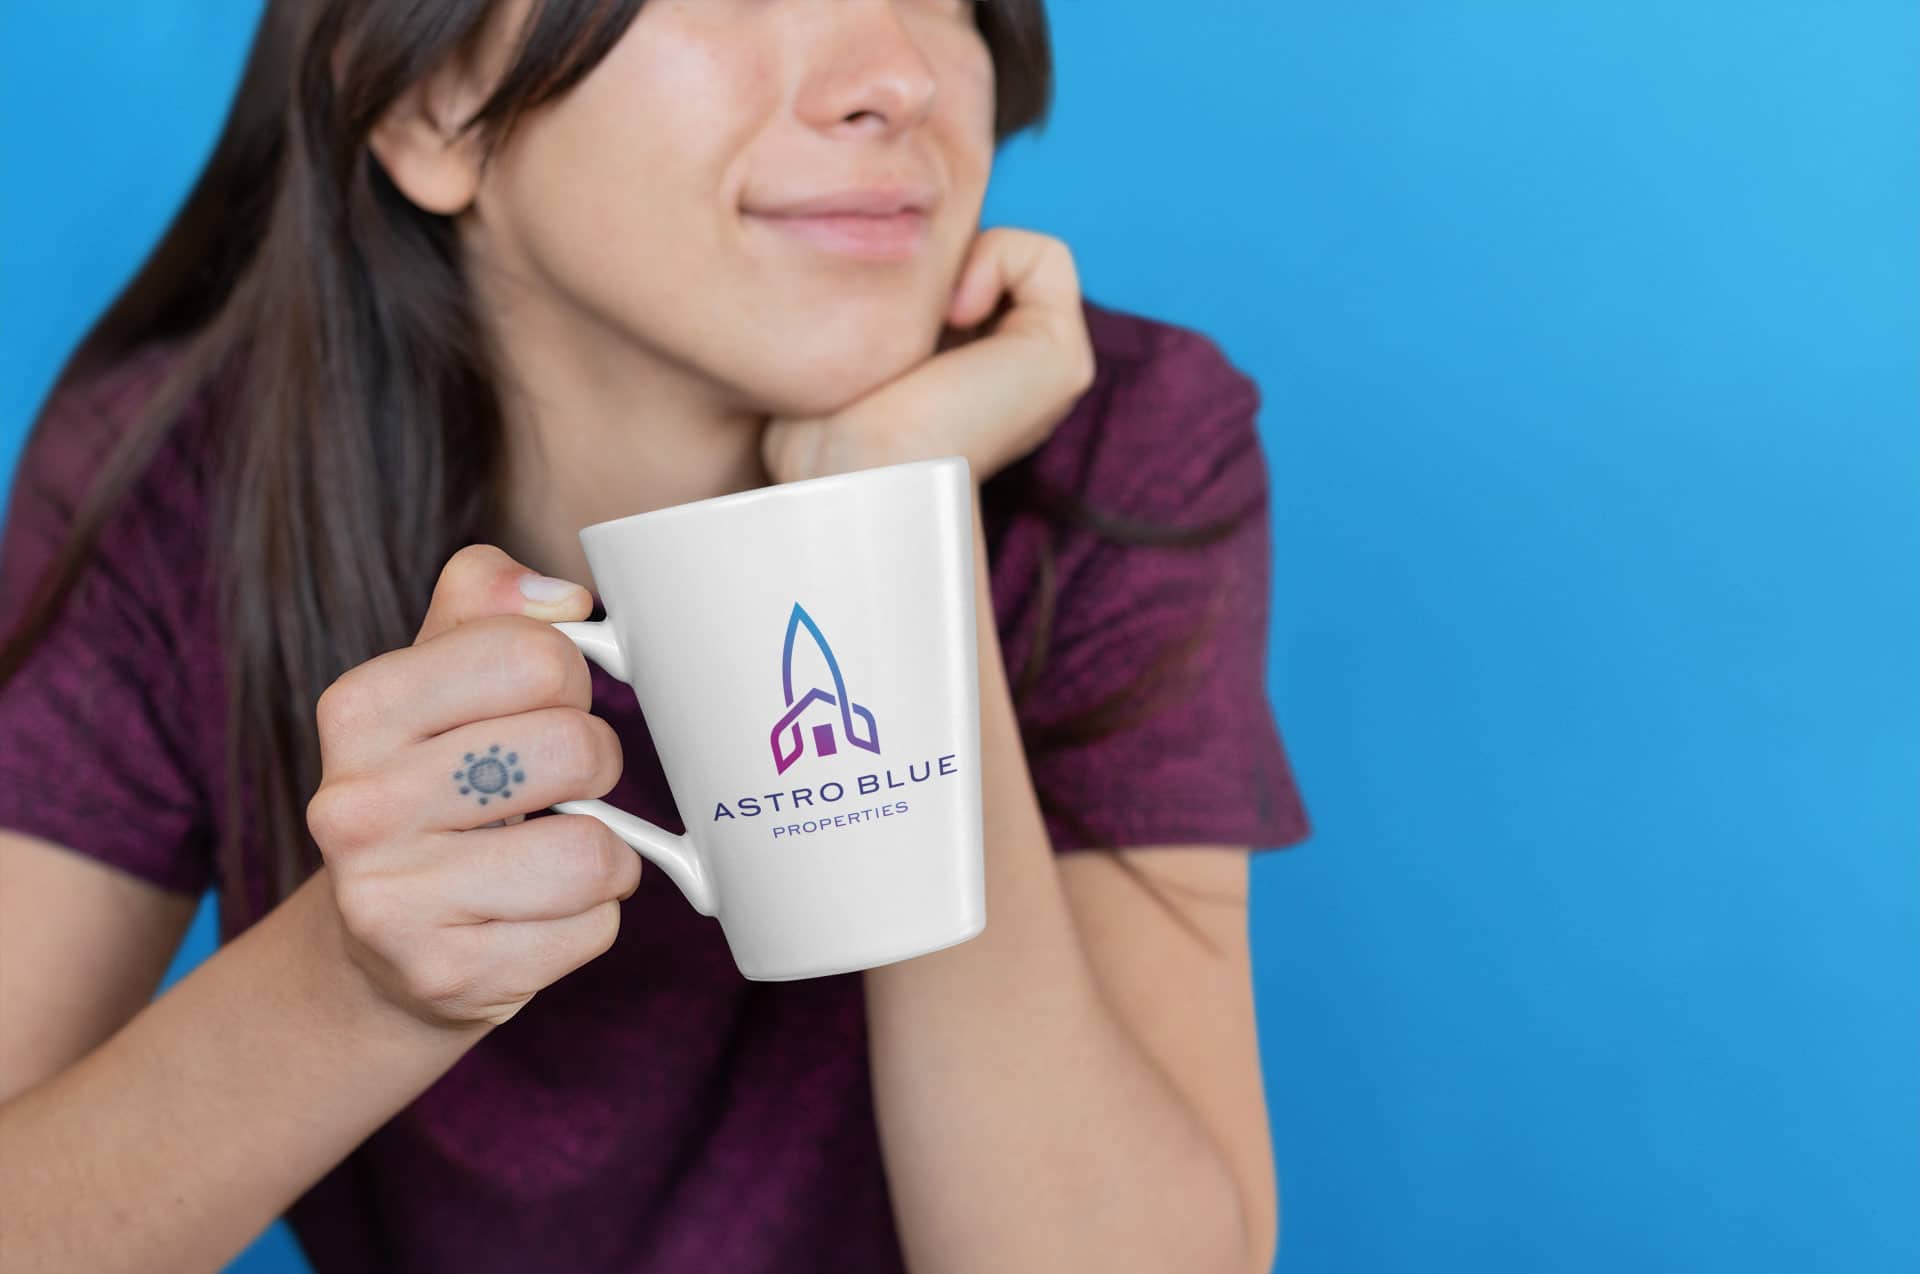 Astro Blue Properties logo on a mug